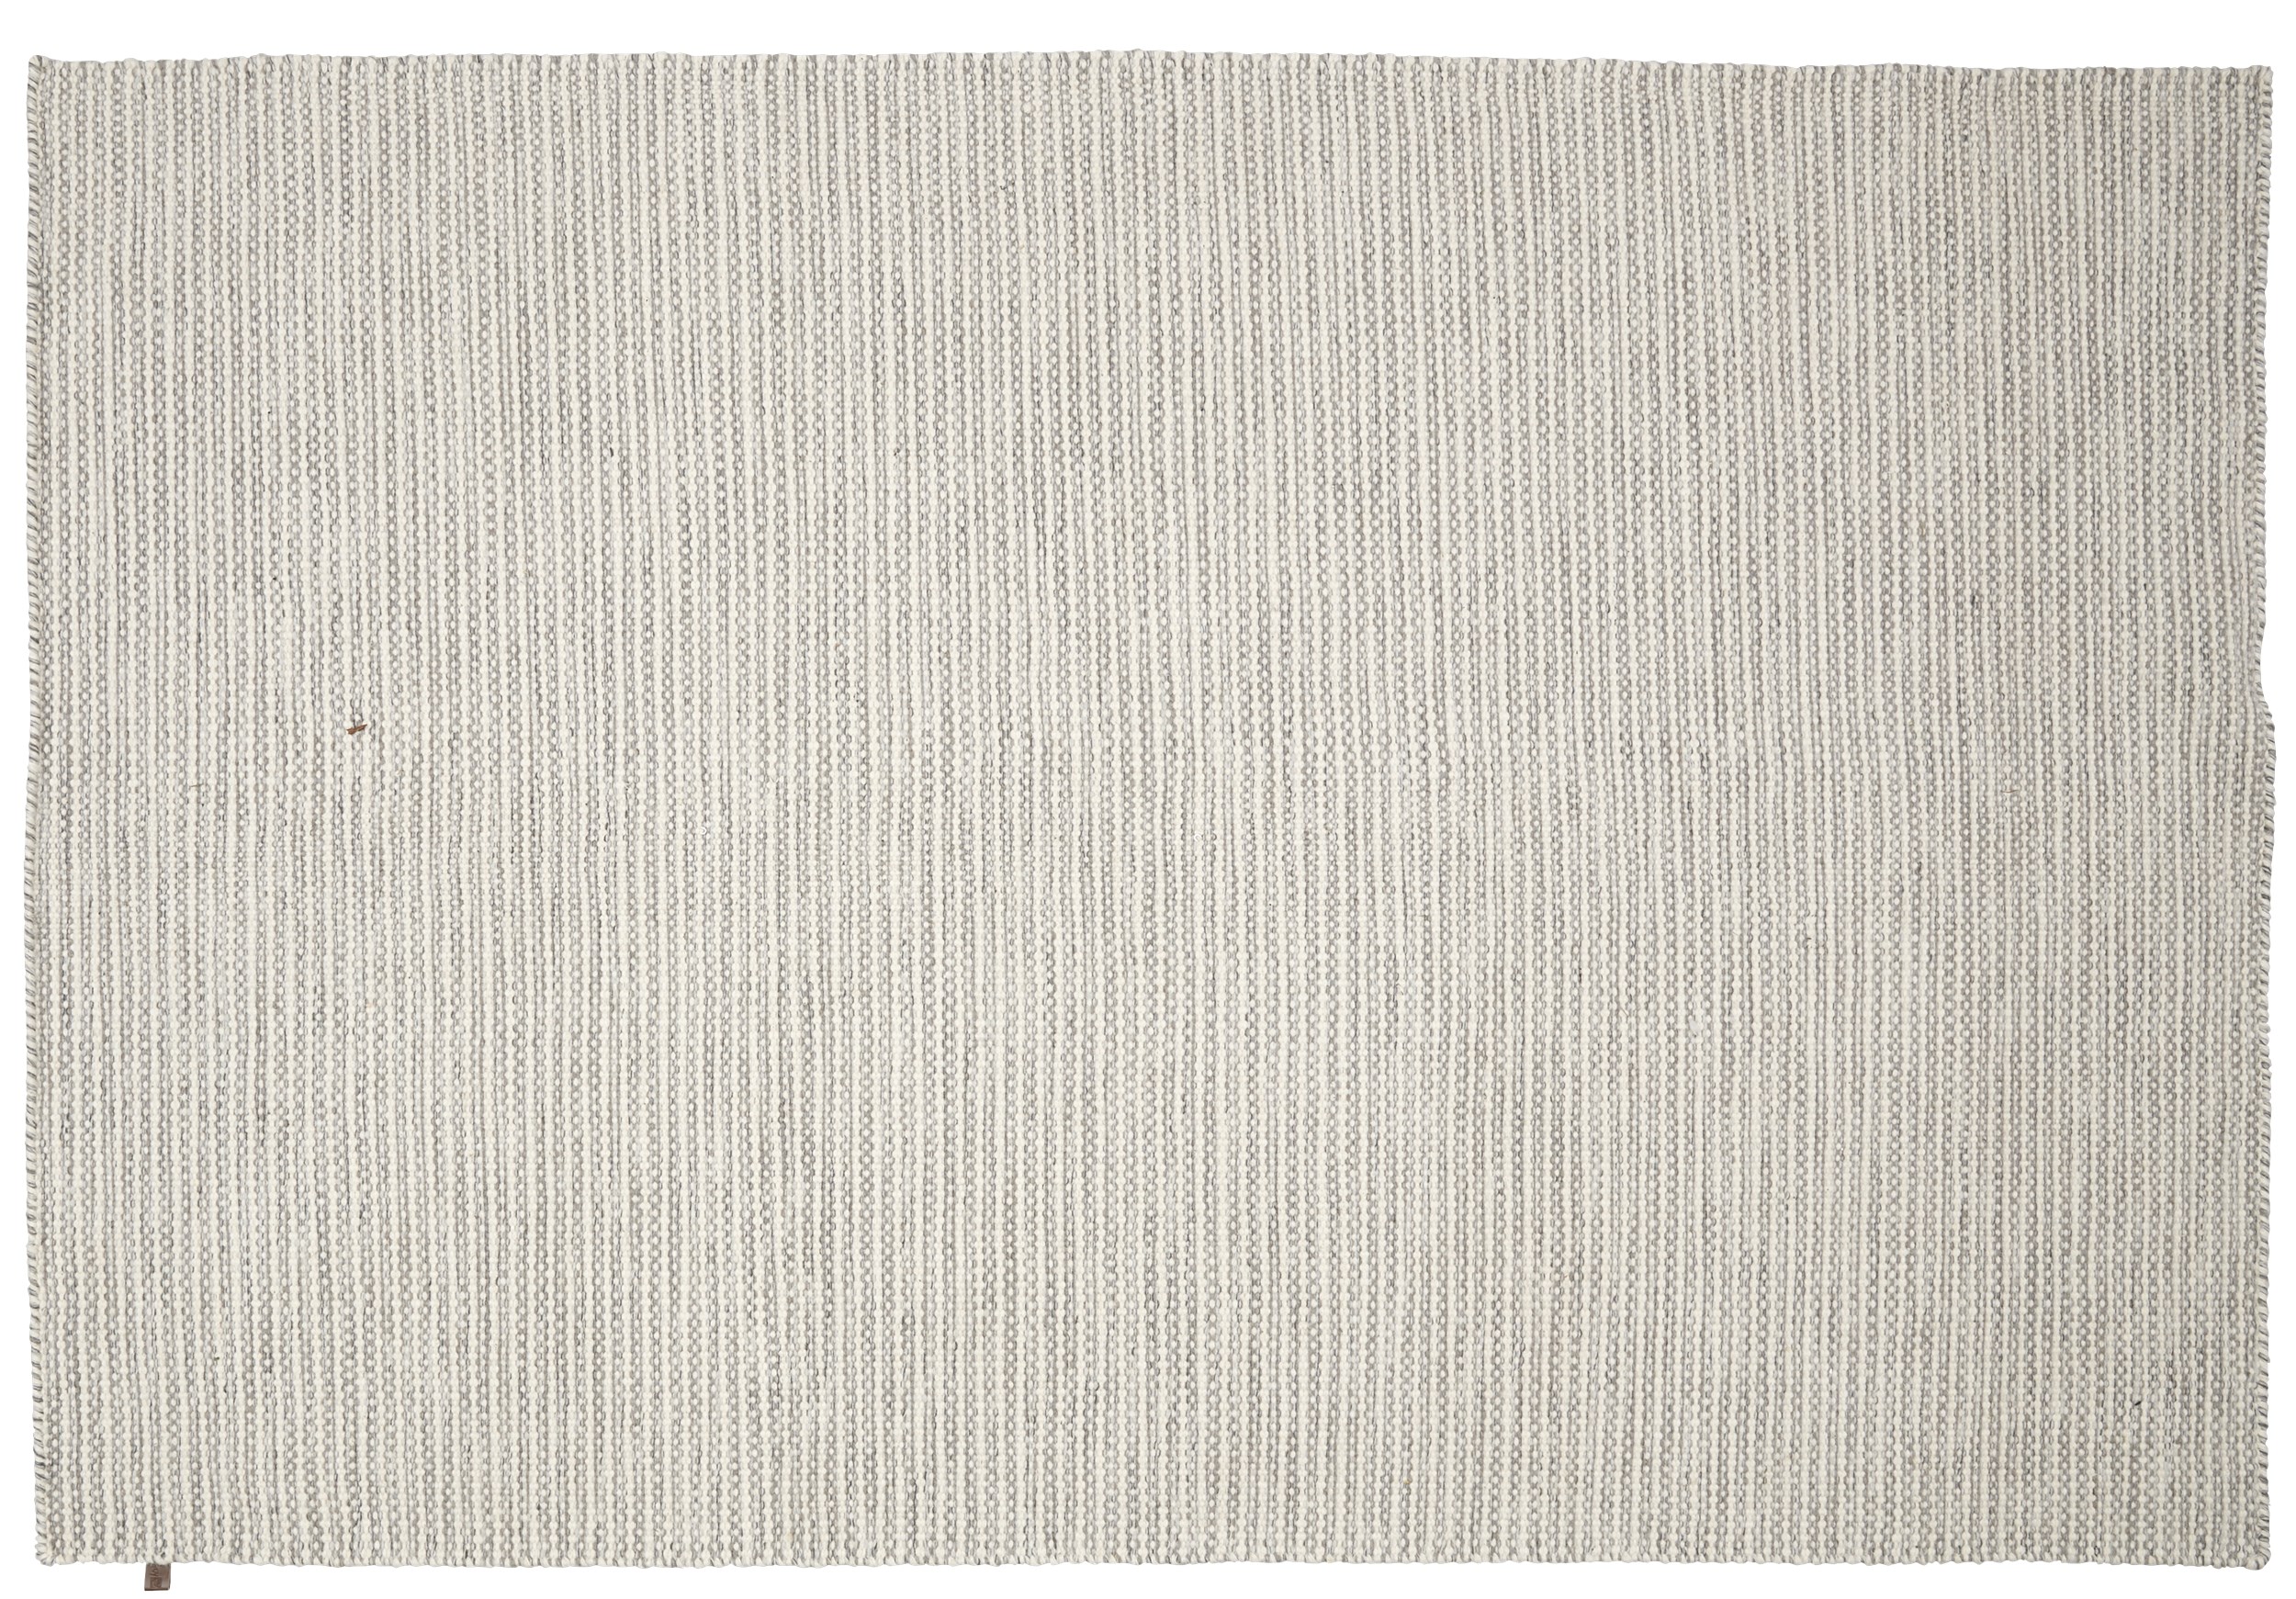 Pilas Kelimmatta 140 x 200 cm - Ull i offwhite/grå